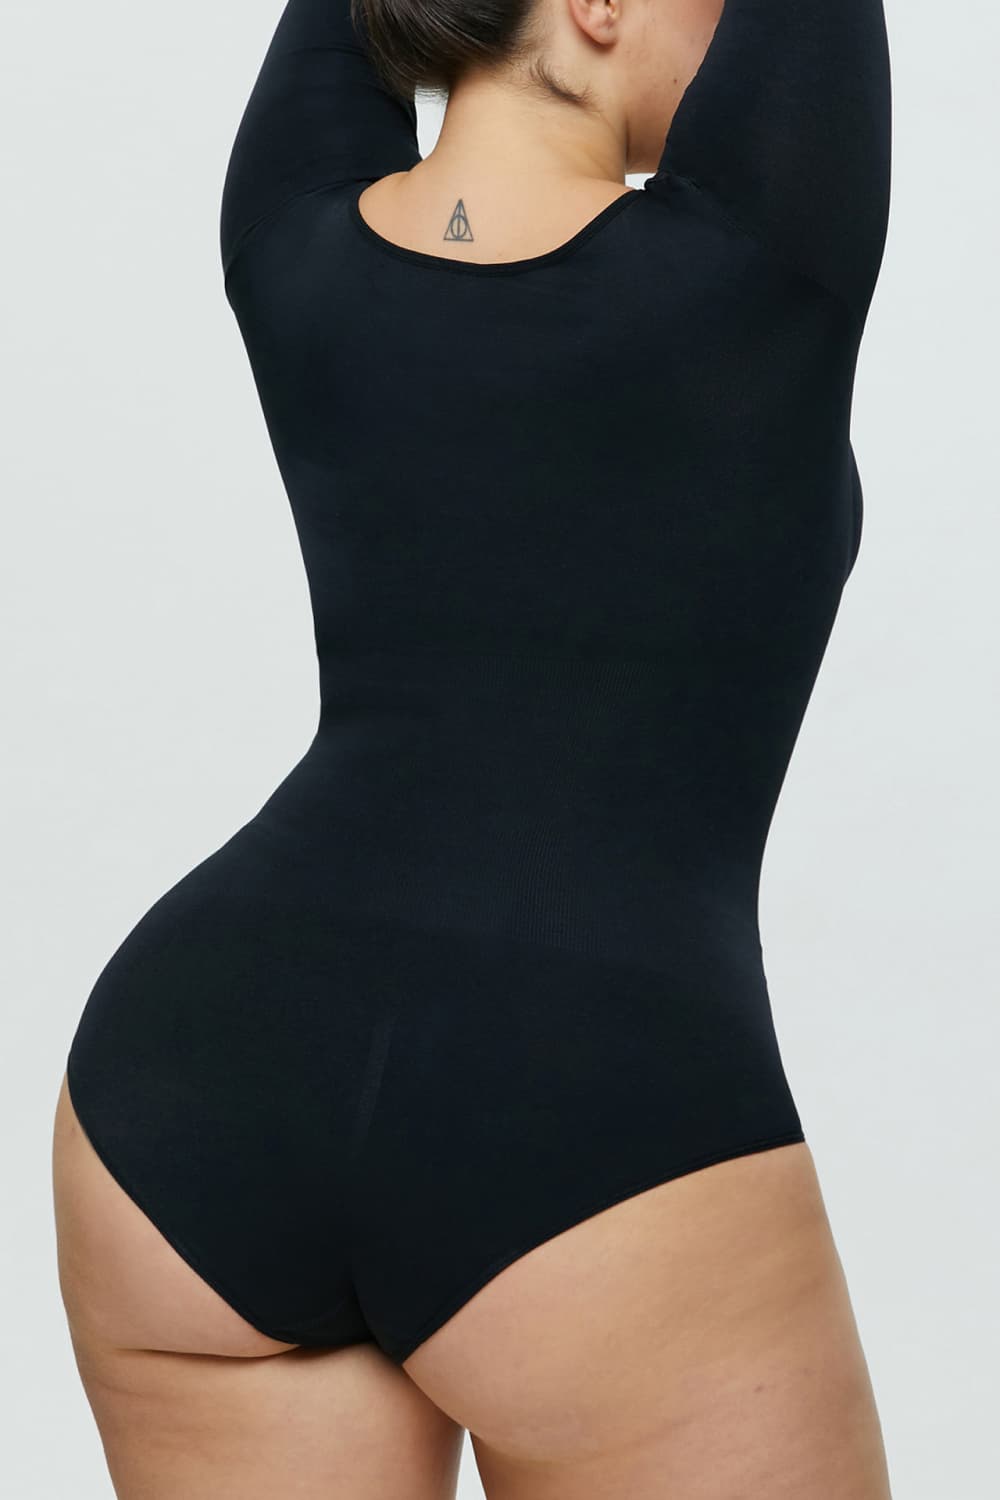 Full Size Long Sleeve Shaping Bodysuit - p9nstyle